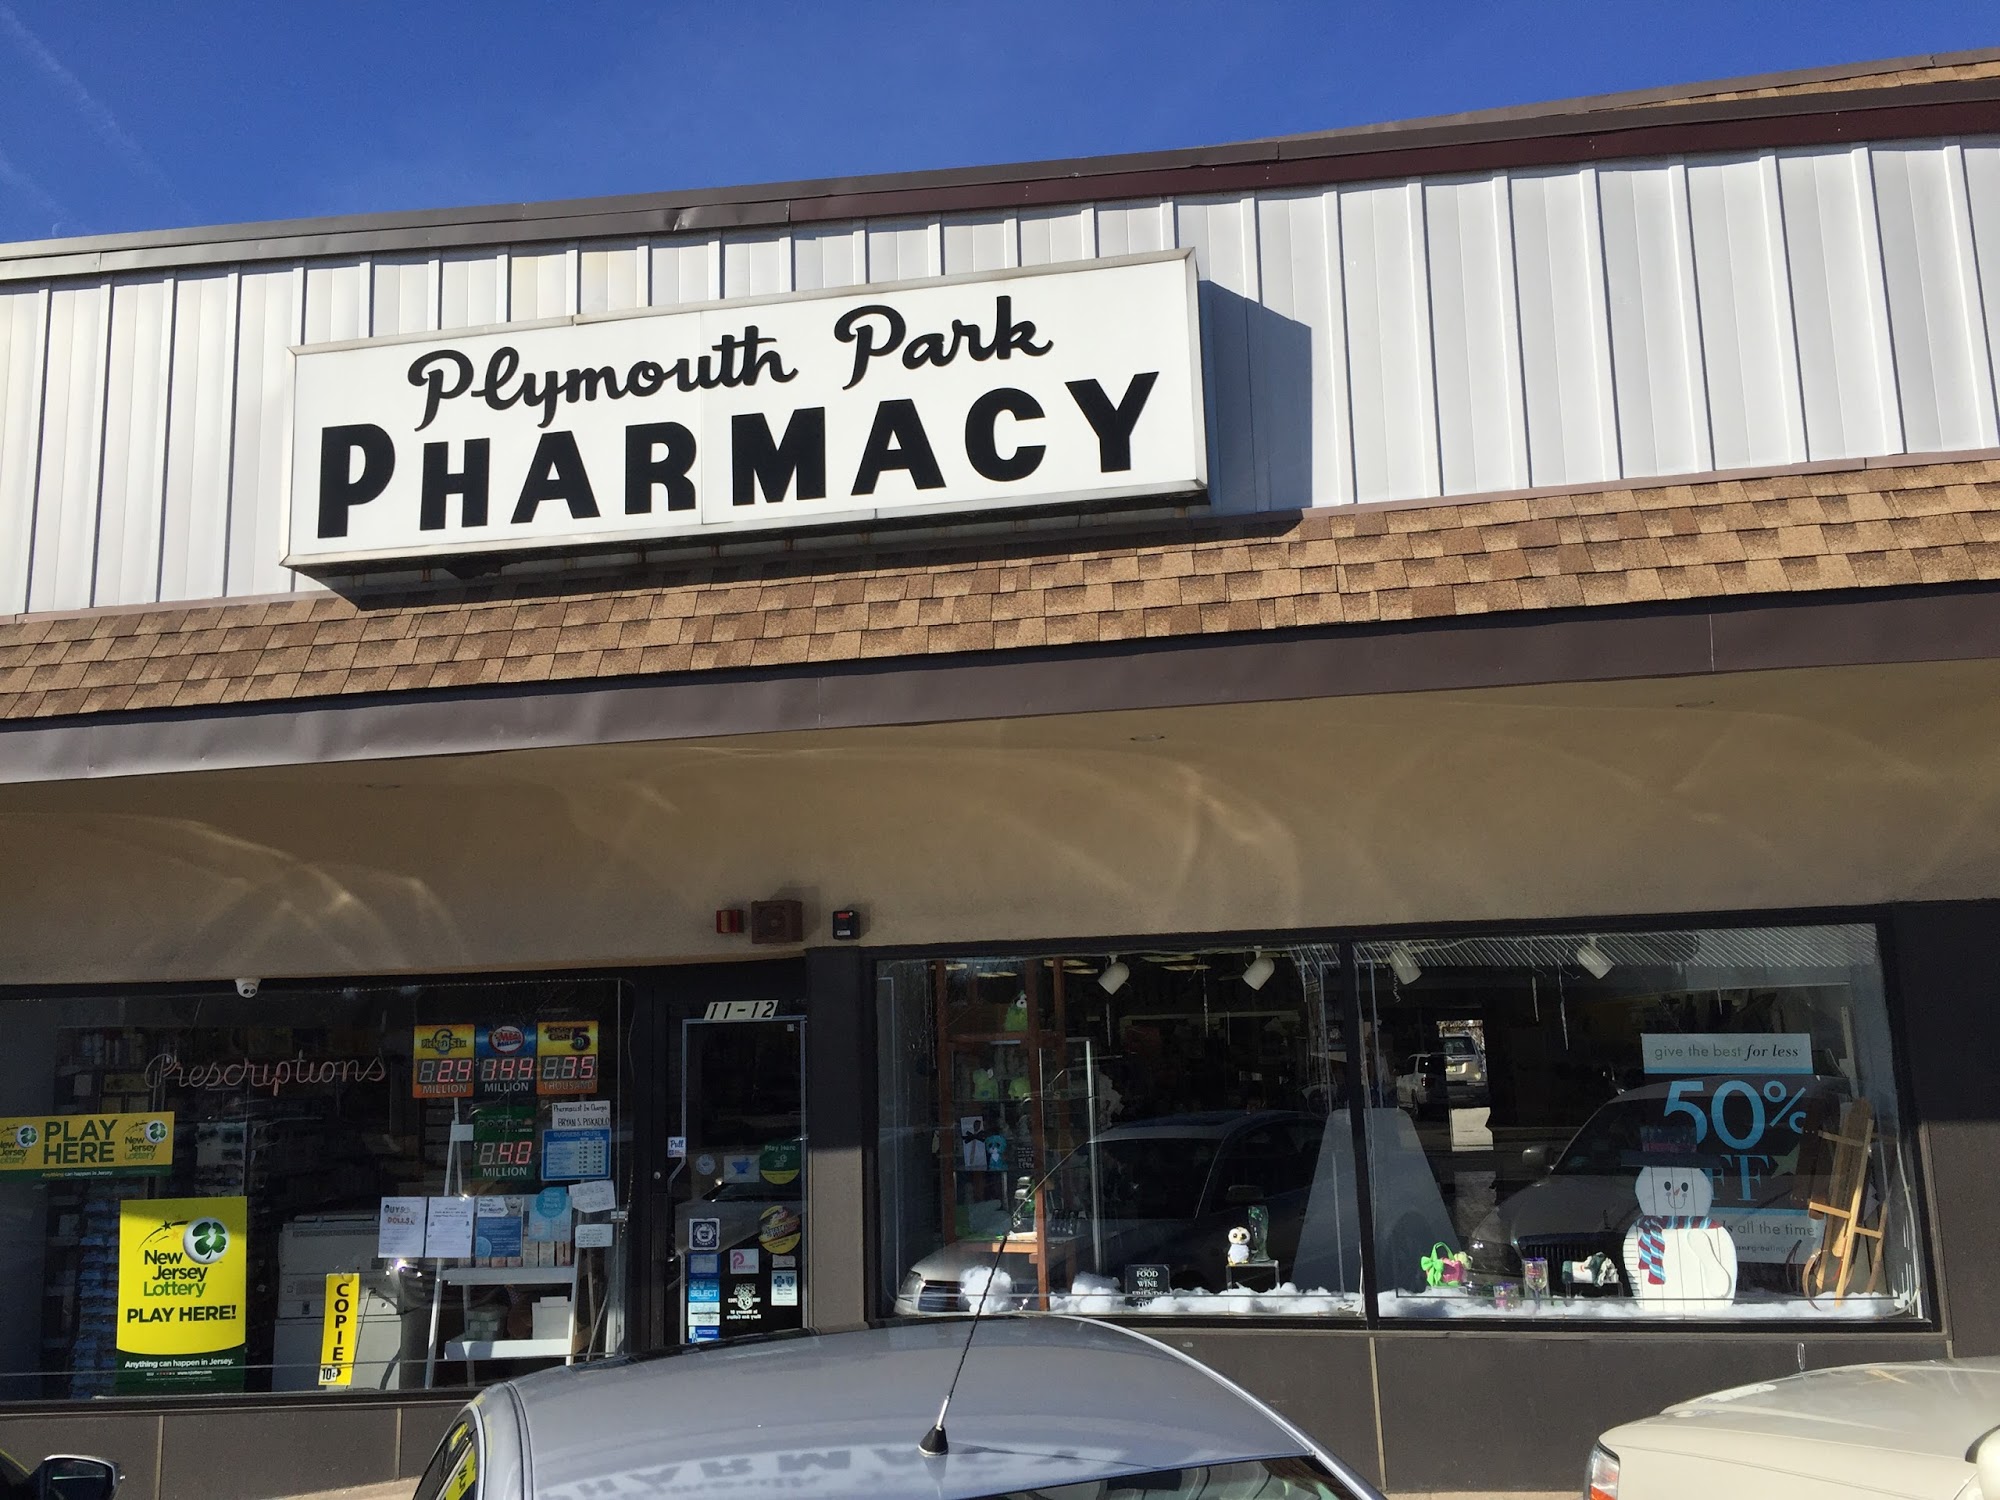 Plymouth Park Pharmacy